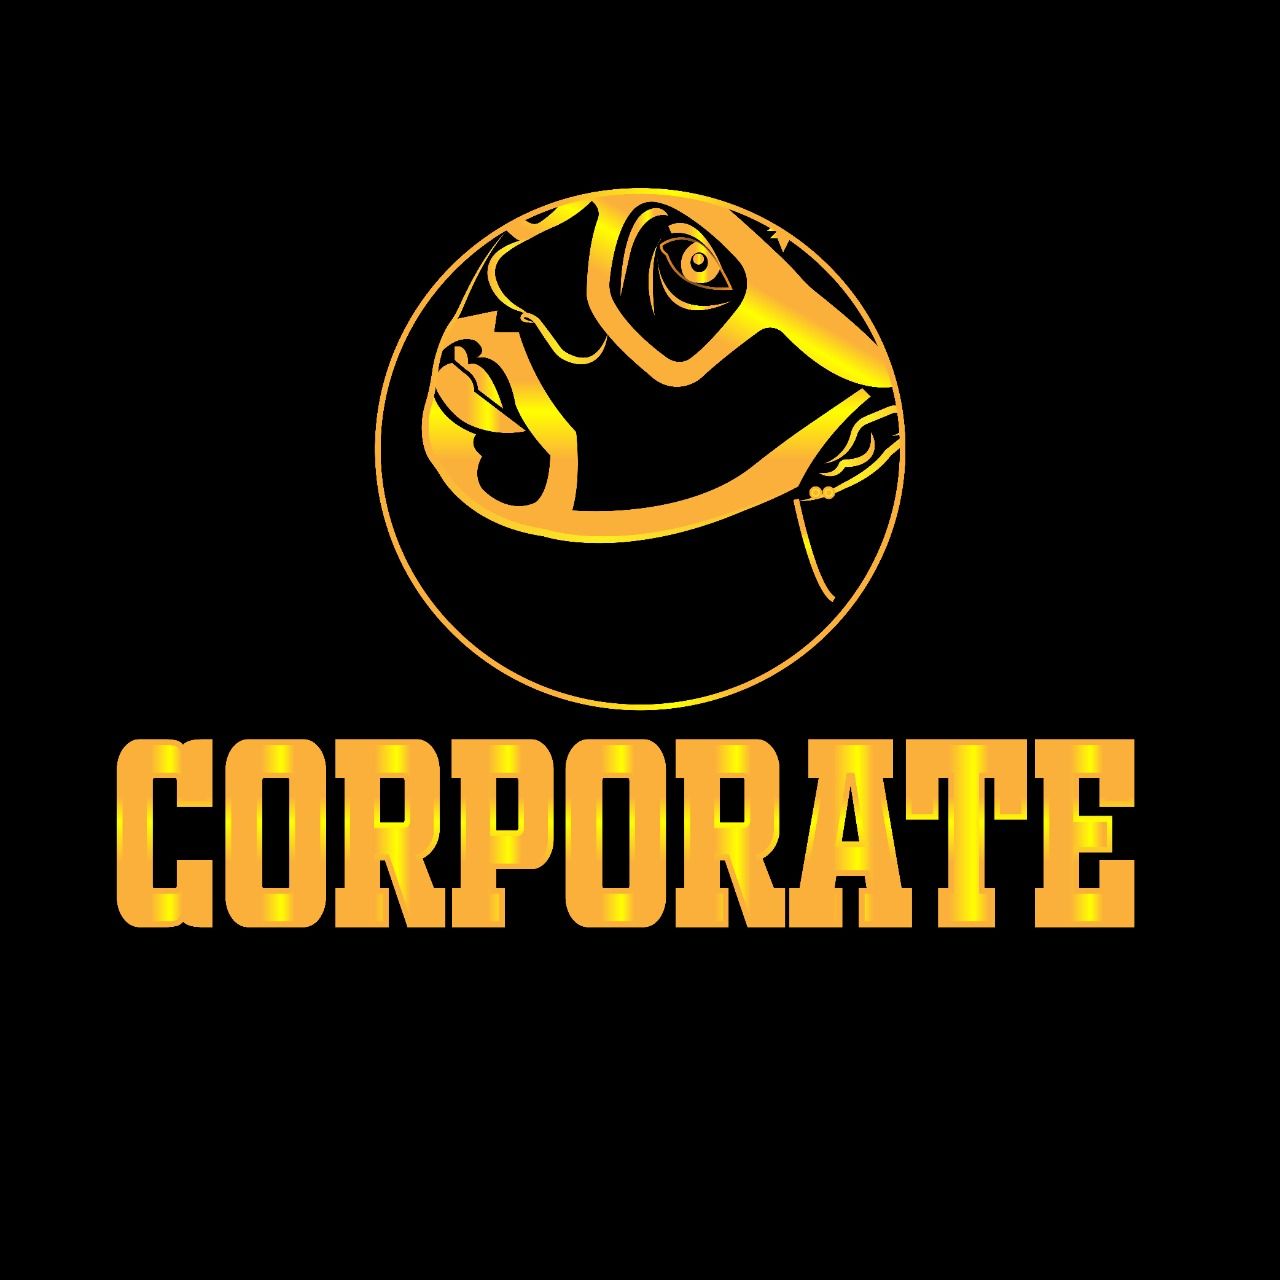 CorporateRecordLabel.com